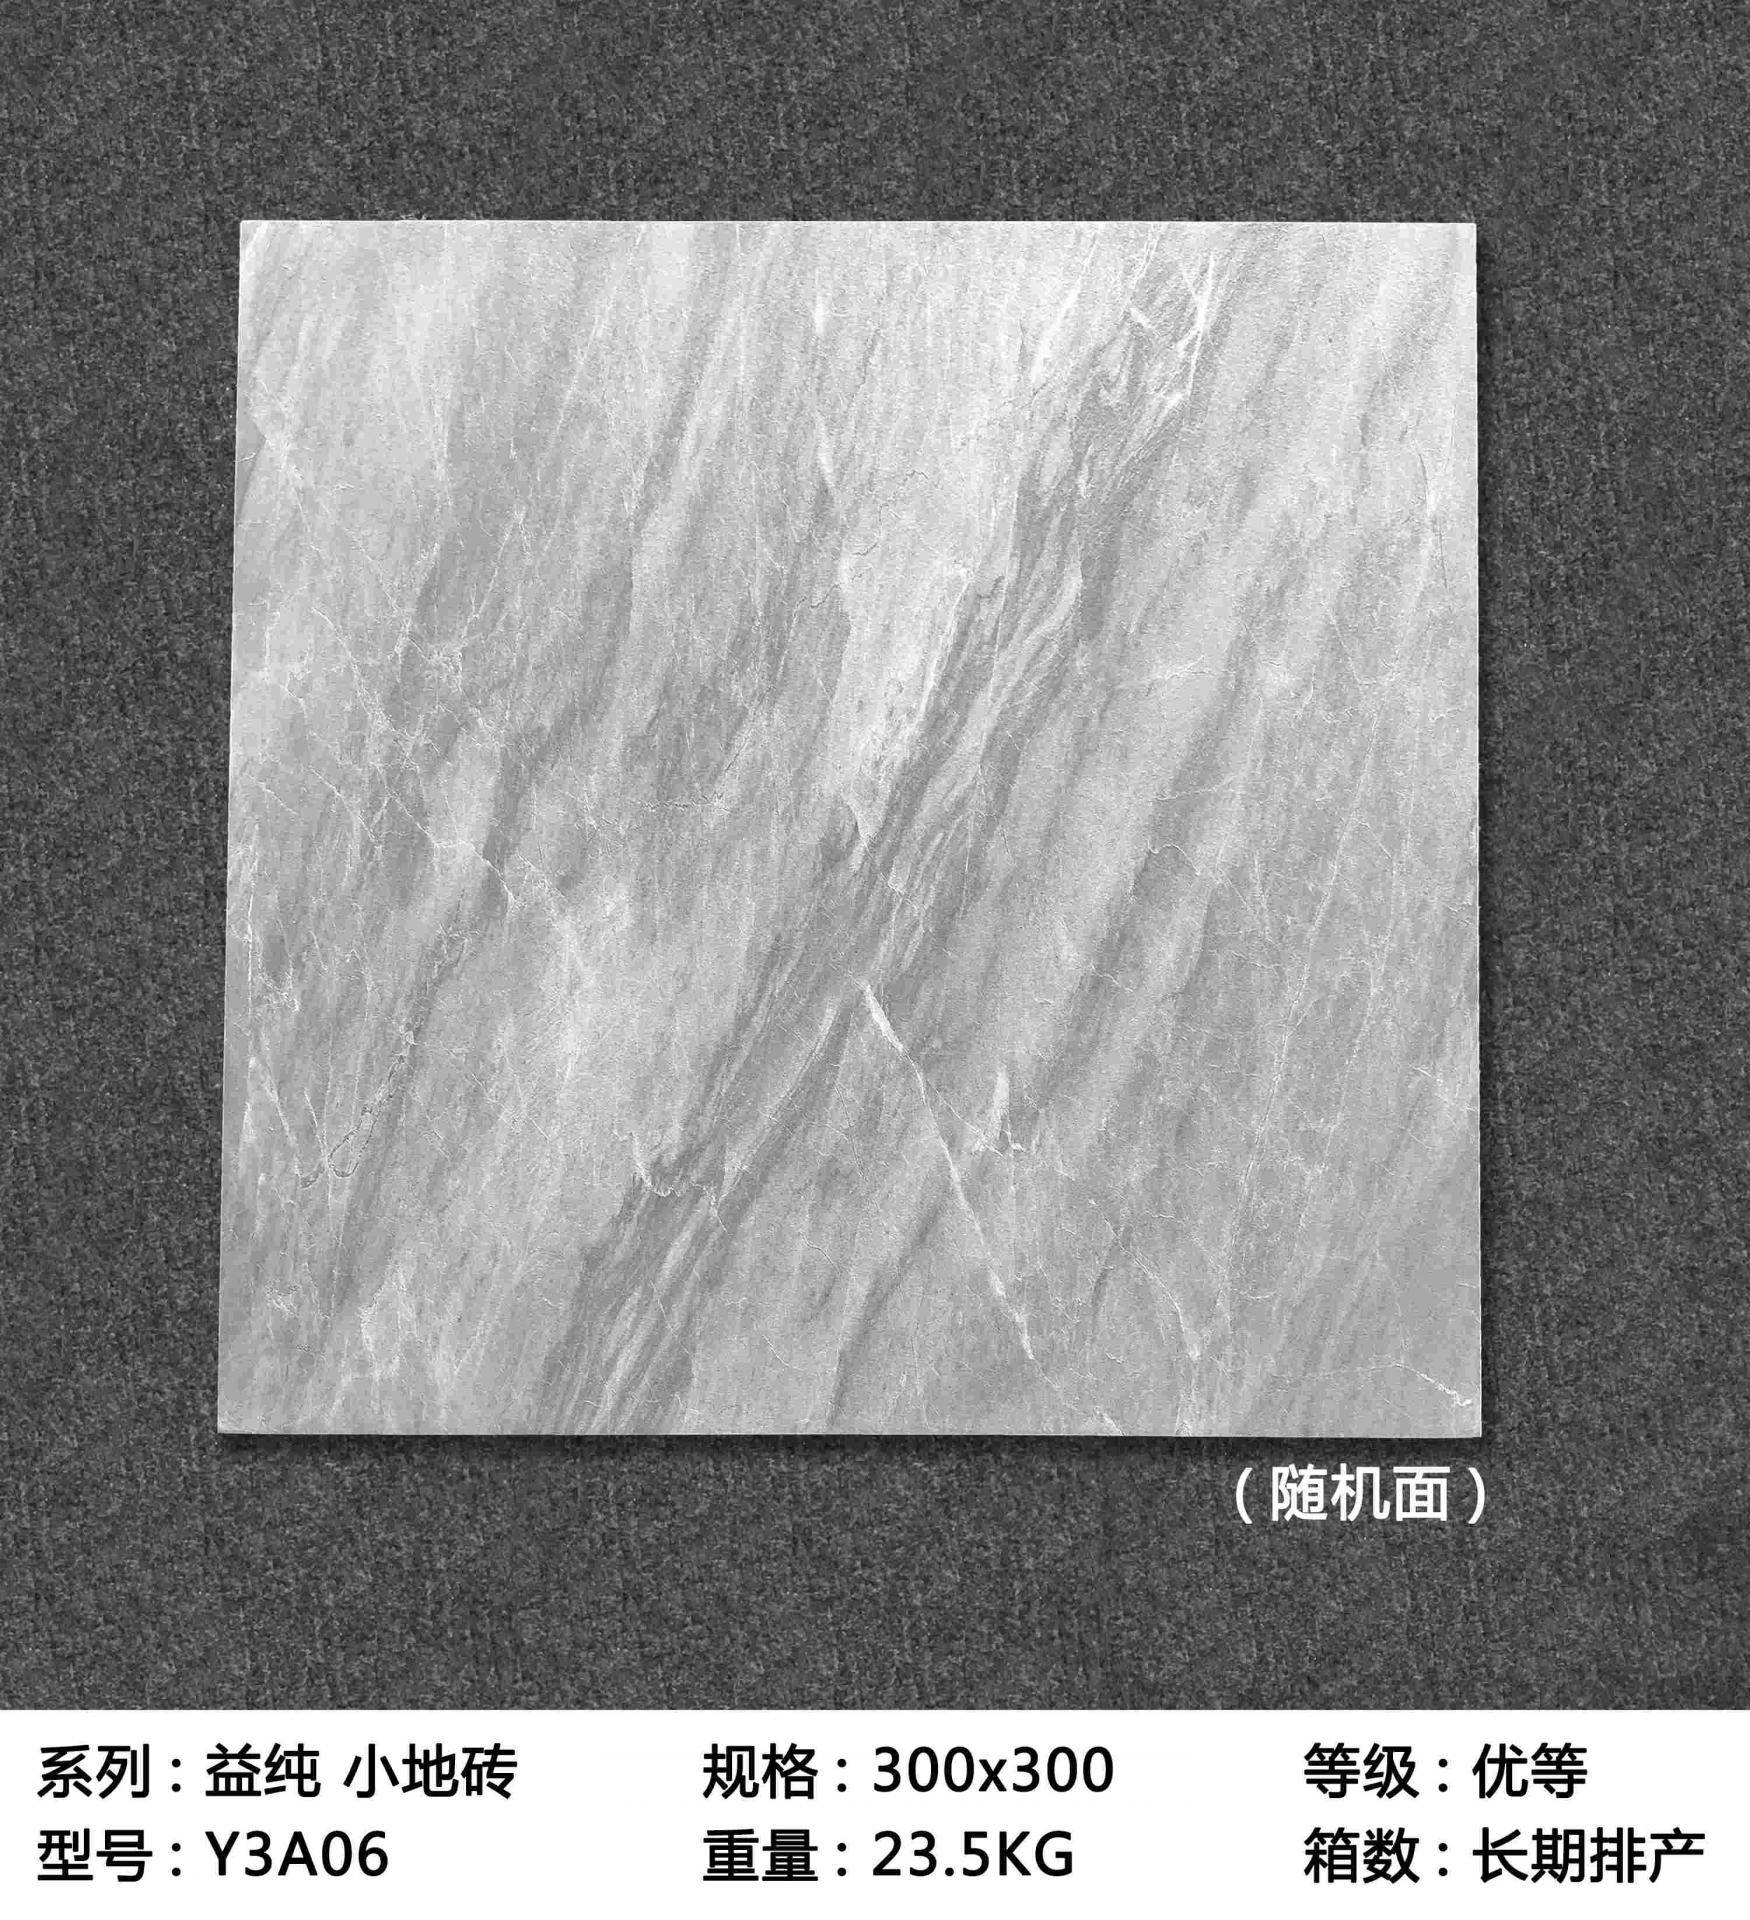 300x300 matt ceramic floor tiles  Y3A06